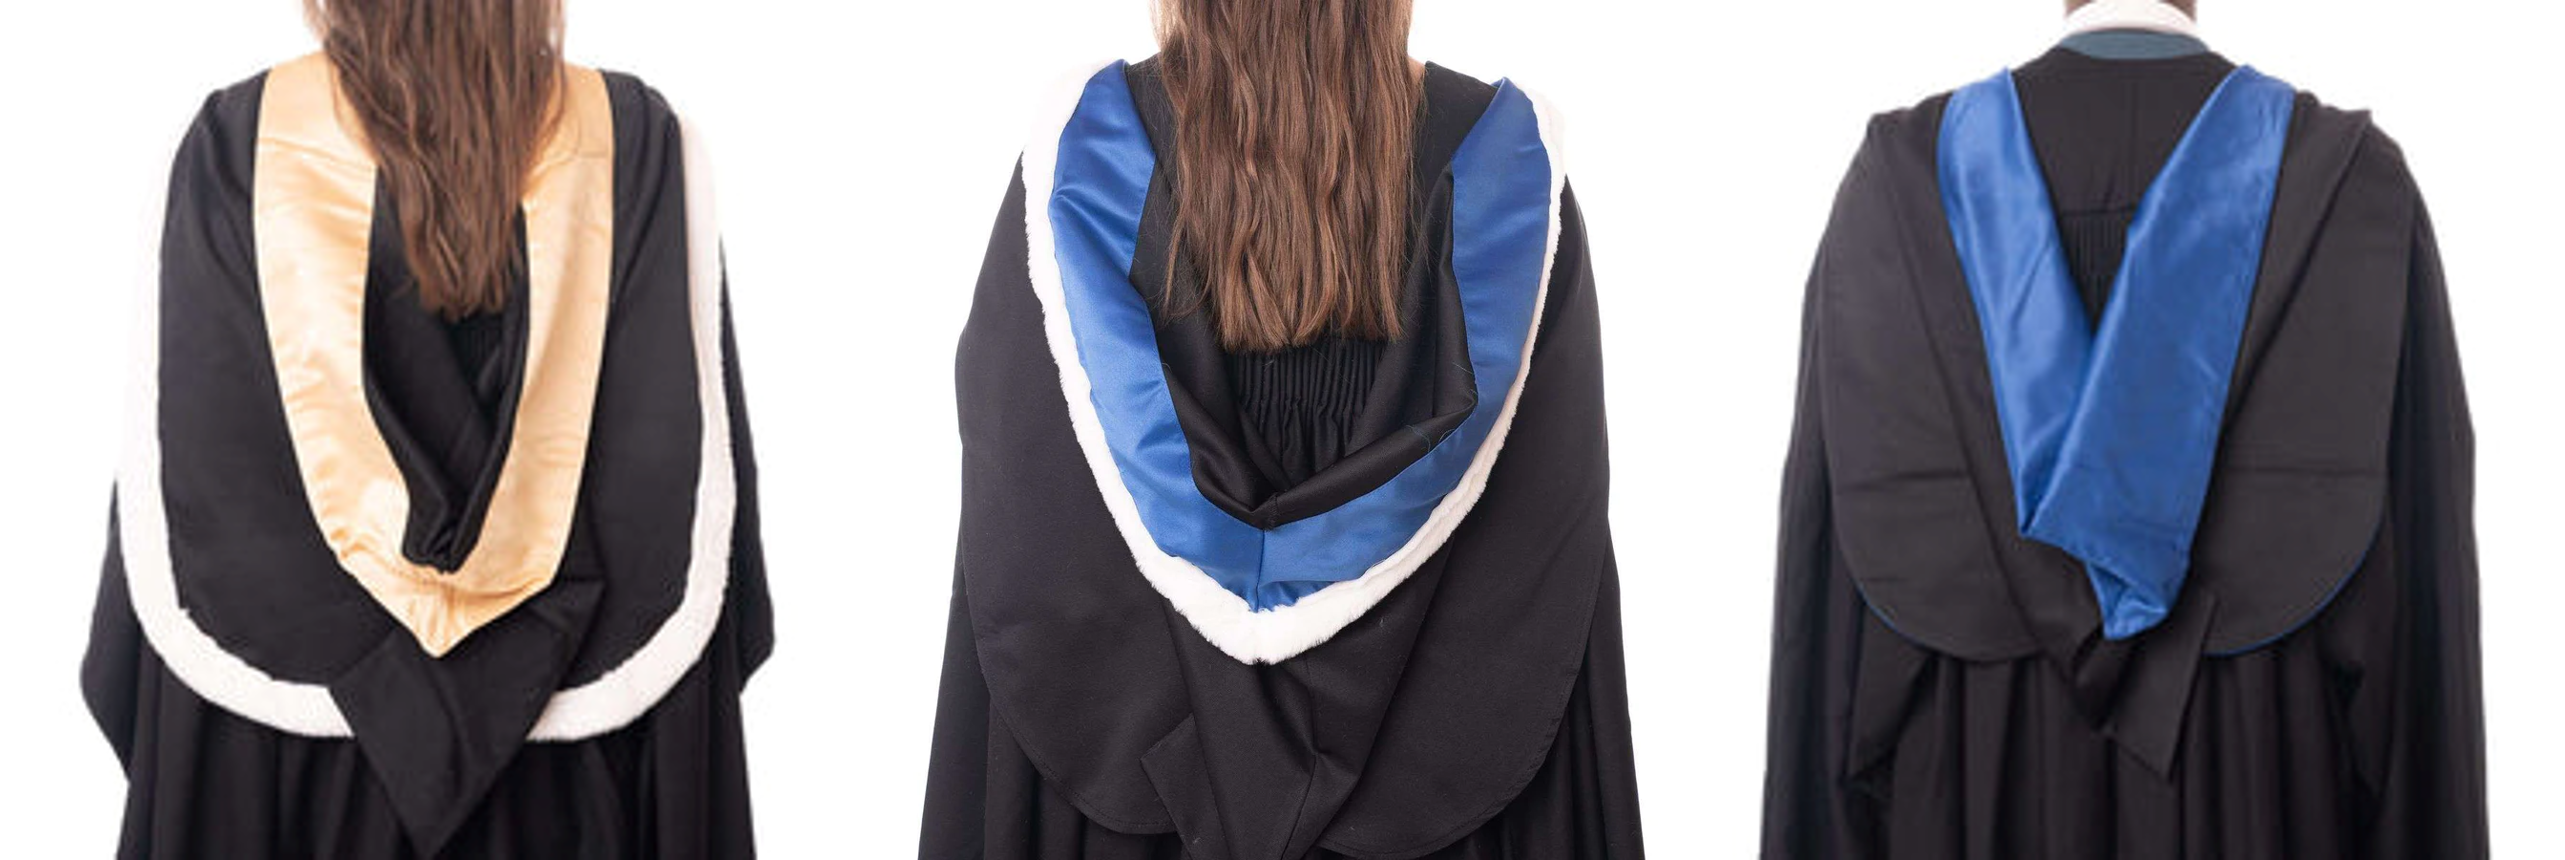 Newcastle University graduation gown styles